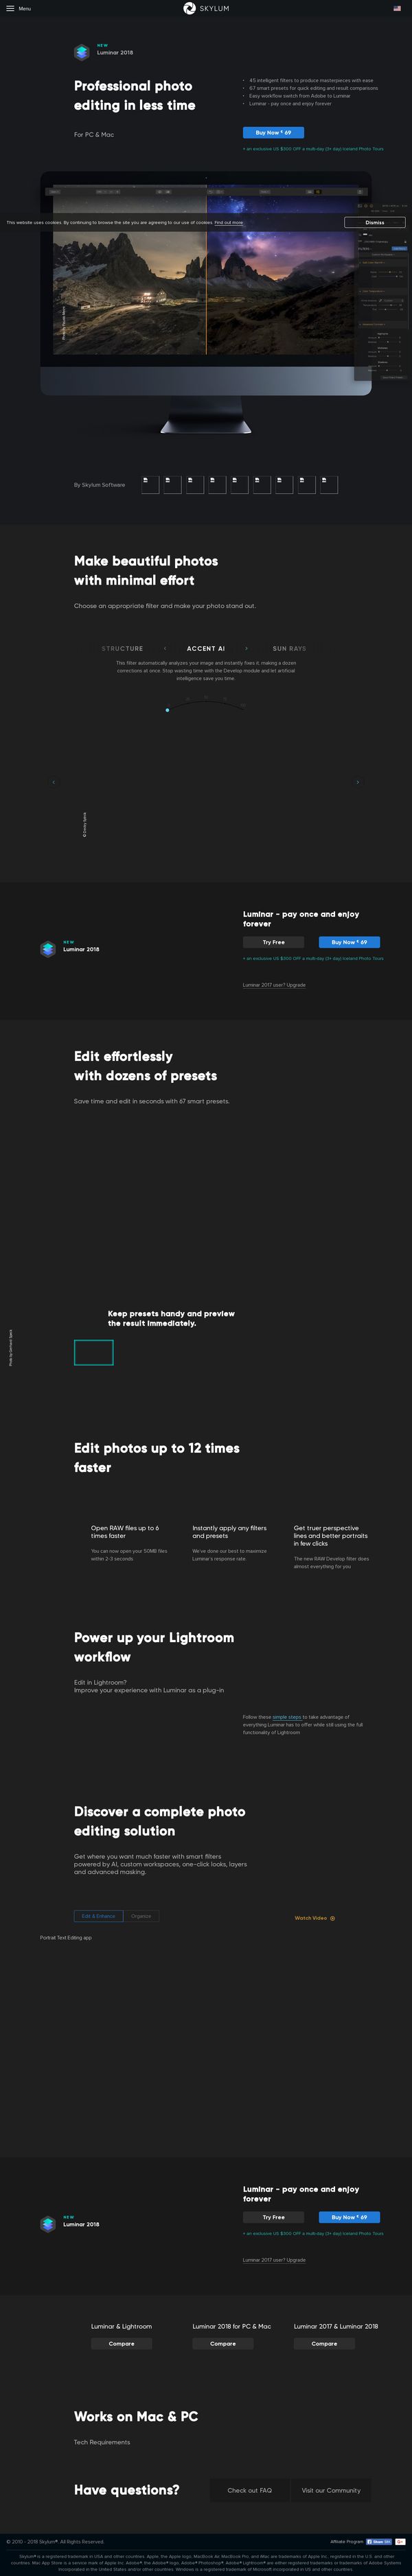 Luminar 2018 - The Best Photo Editing Software for Mac & PC | Skylum